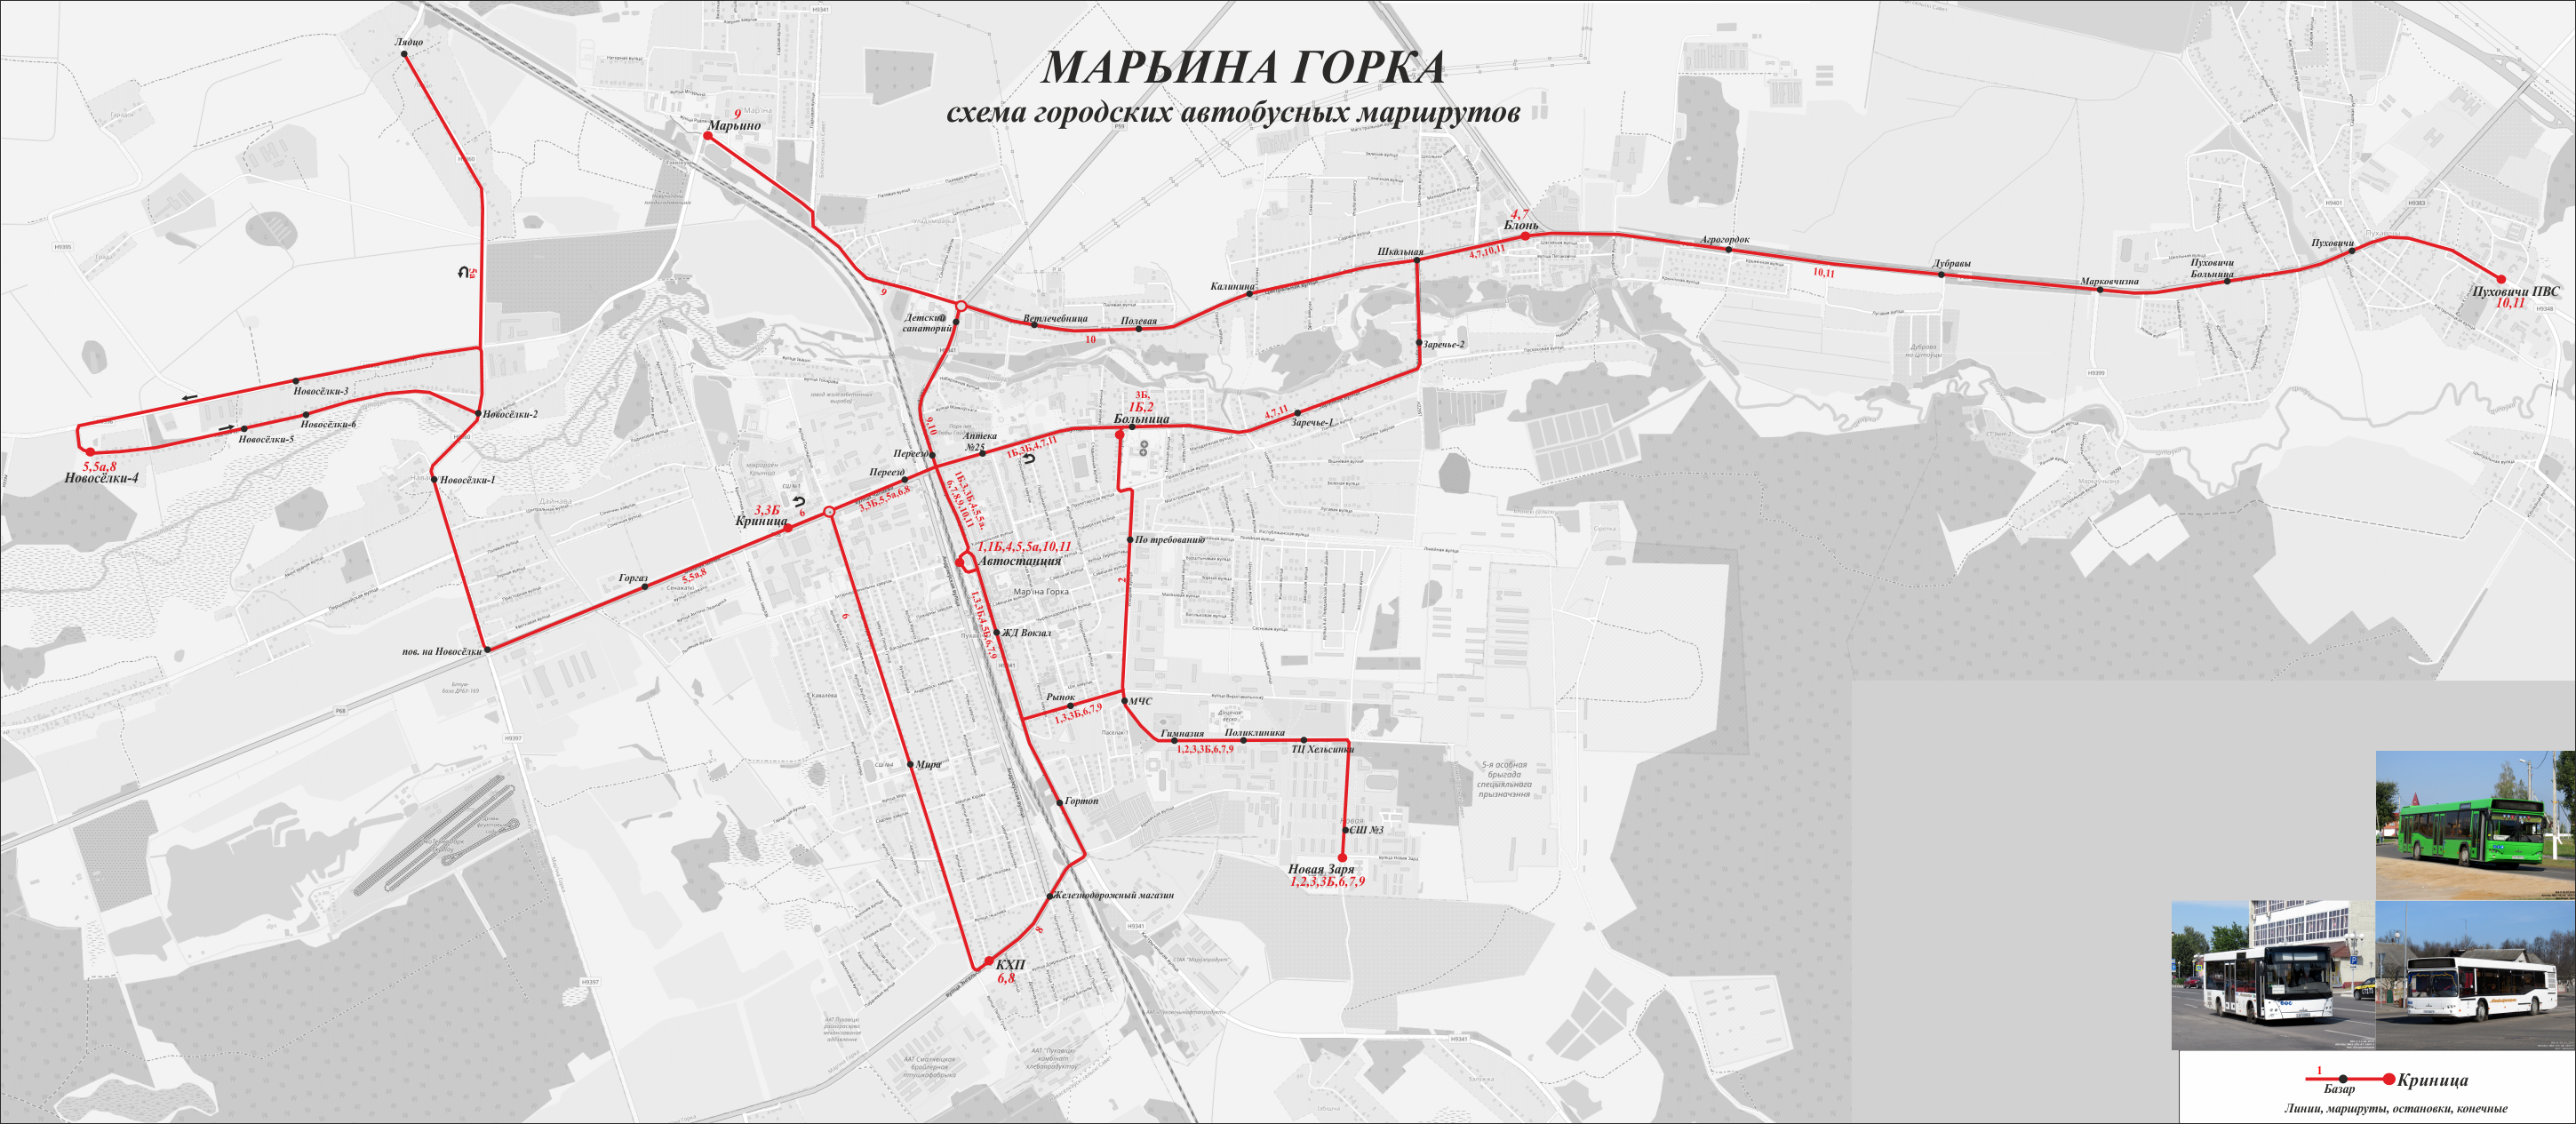 Marina Gorka — Maps; Maps routes